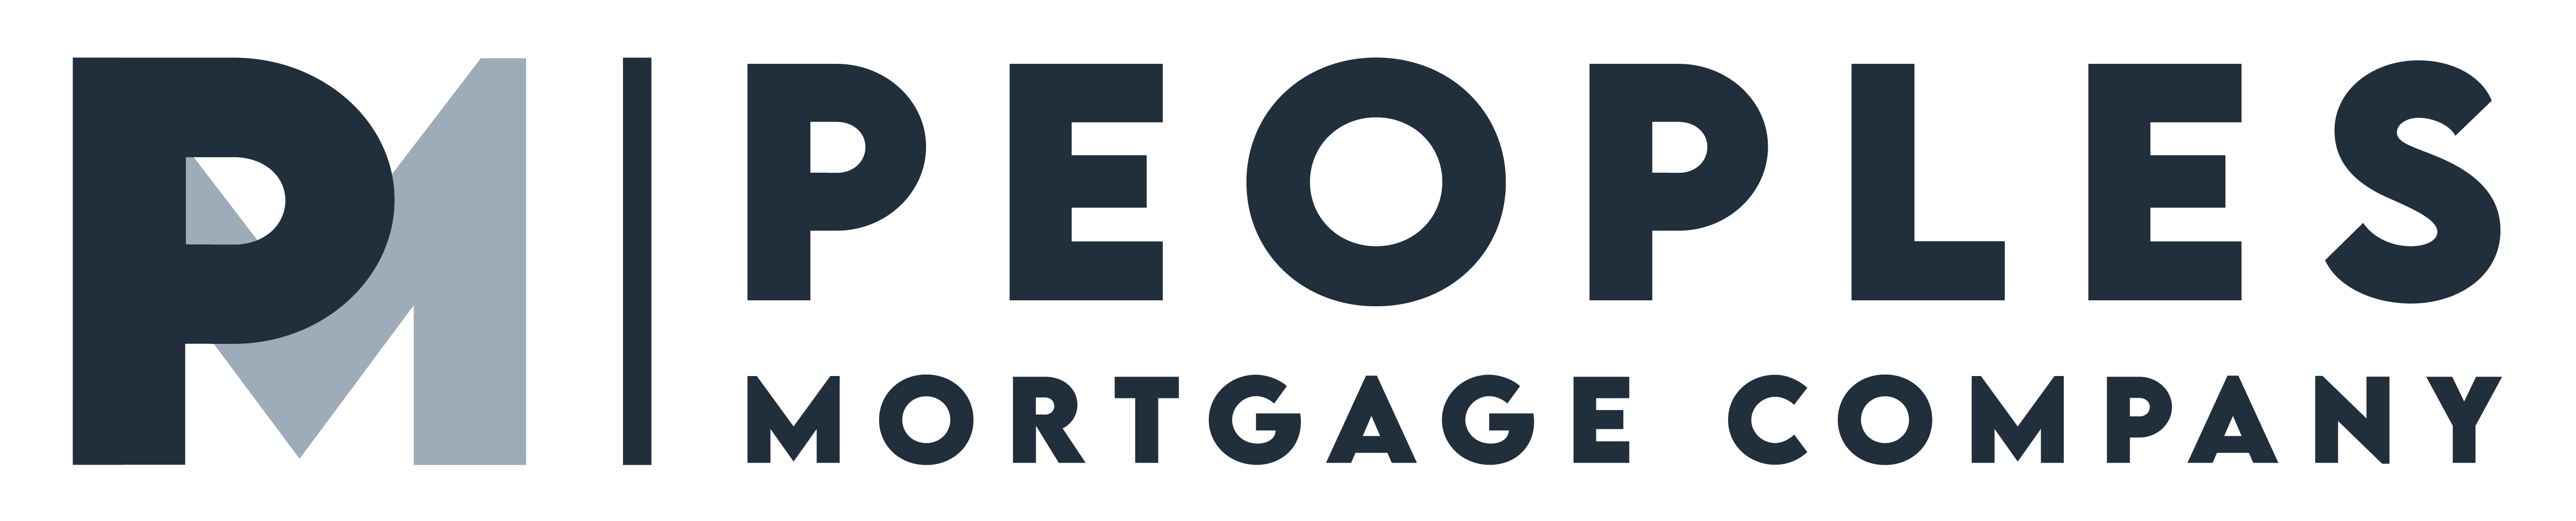 Peoples Mortgage Company Company Logo